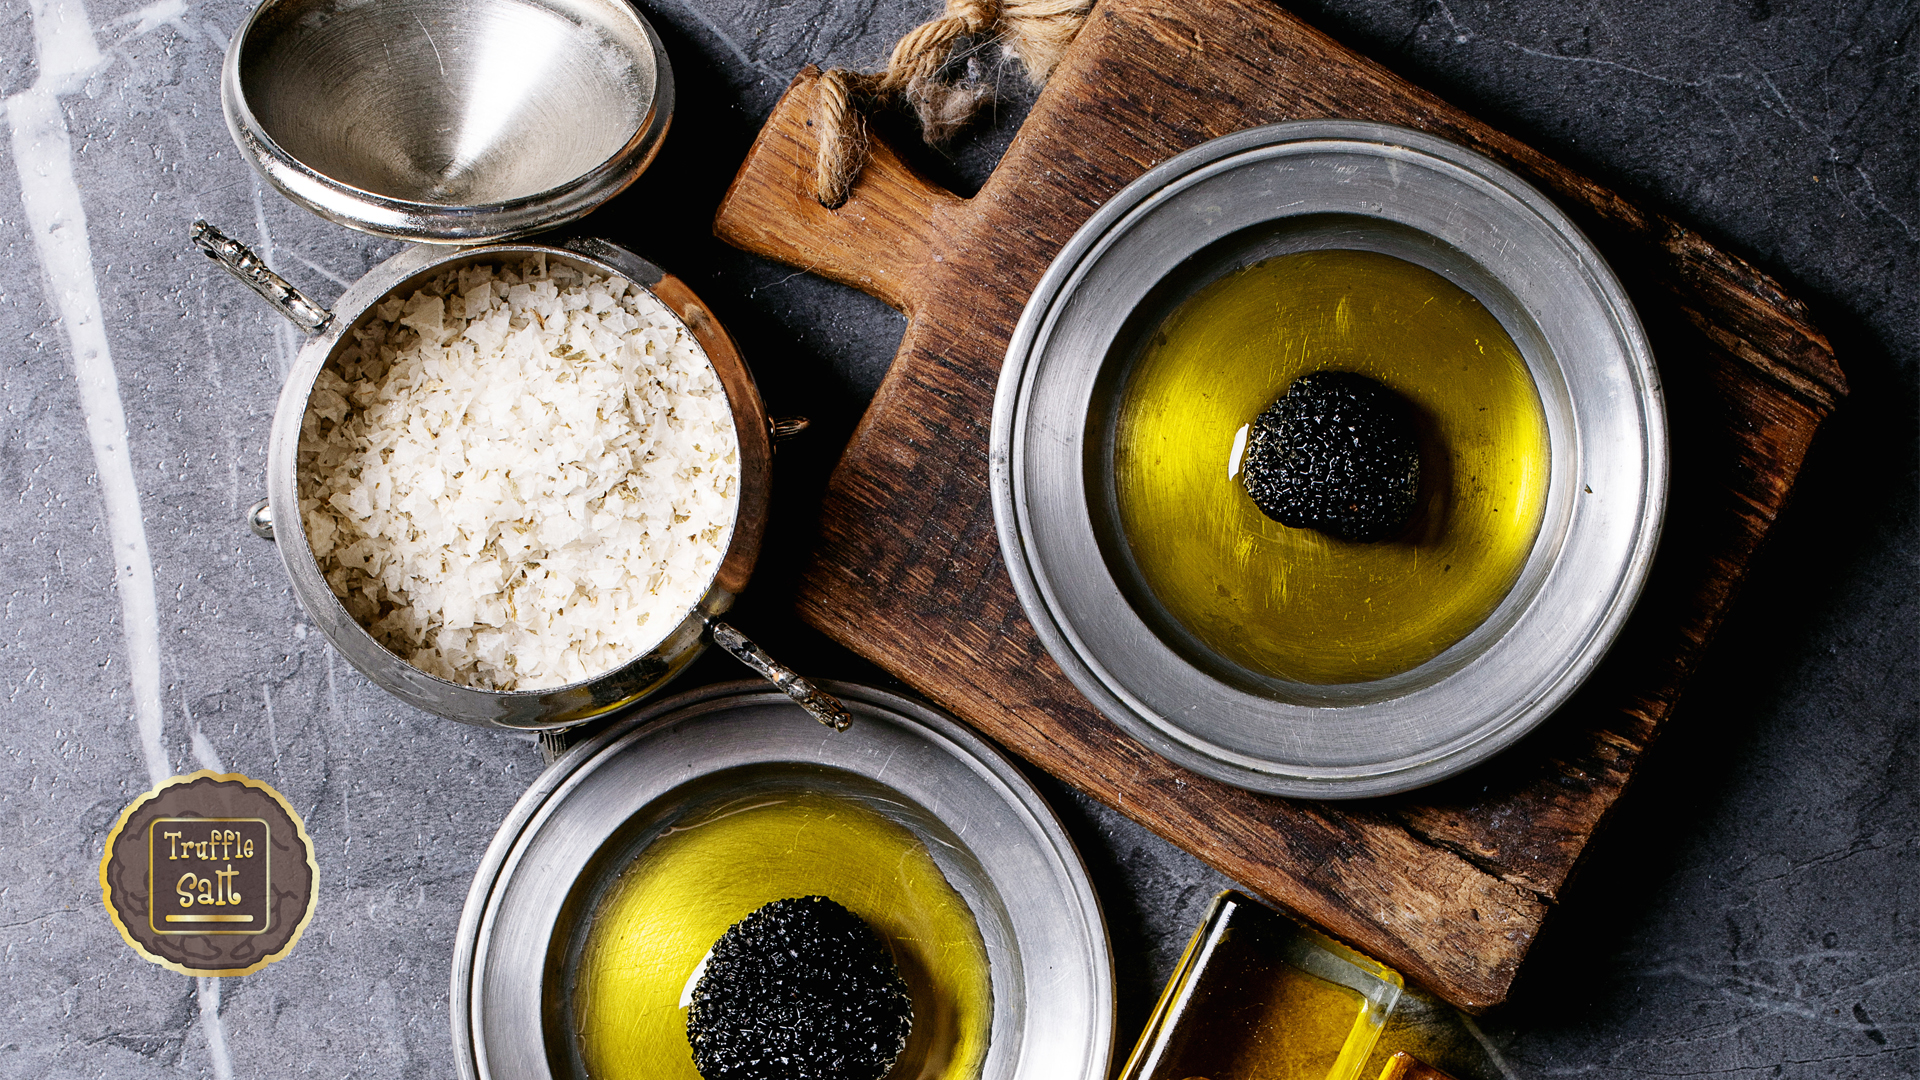 Truffle Salt: The Divine Ingredient